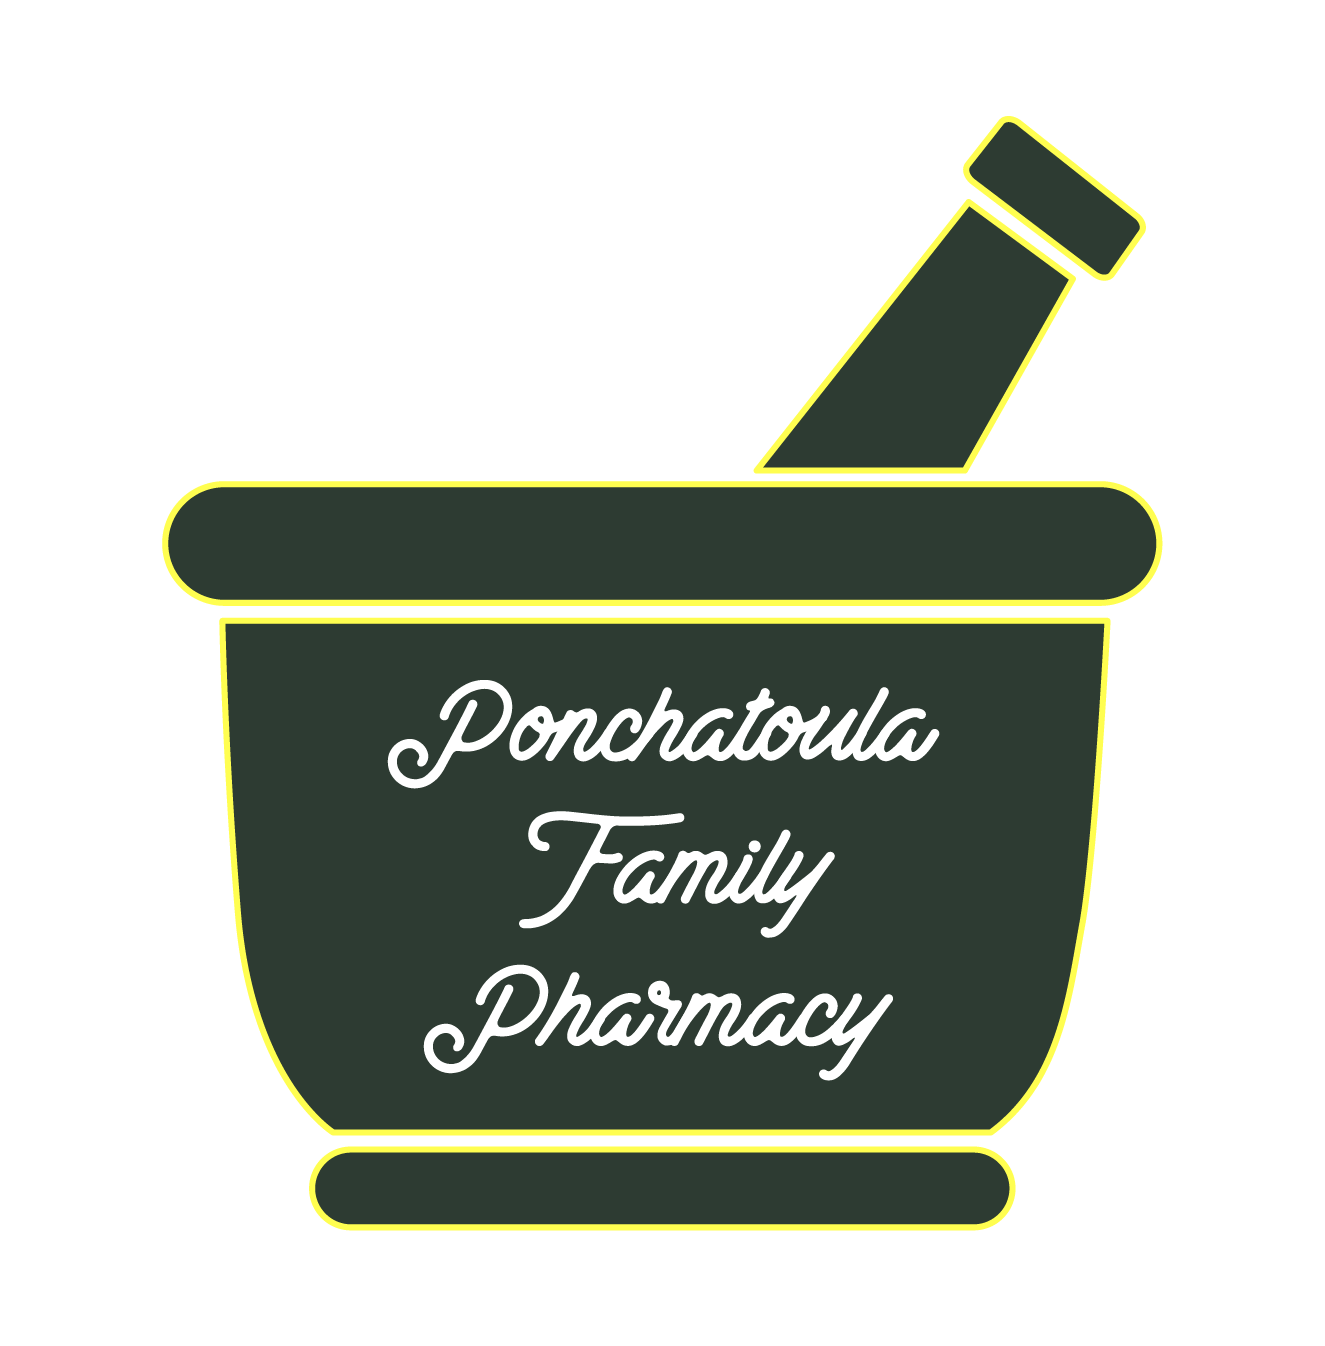 Ponchatoula Family Pharmacy